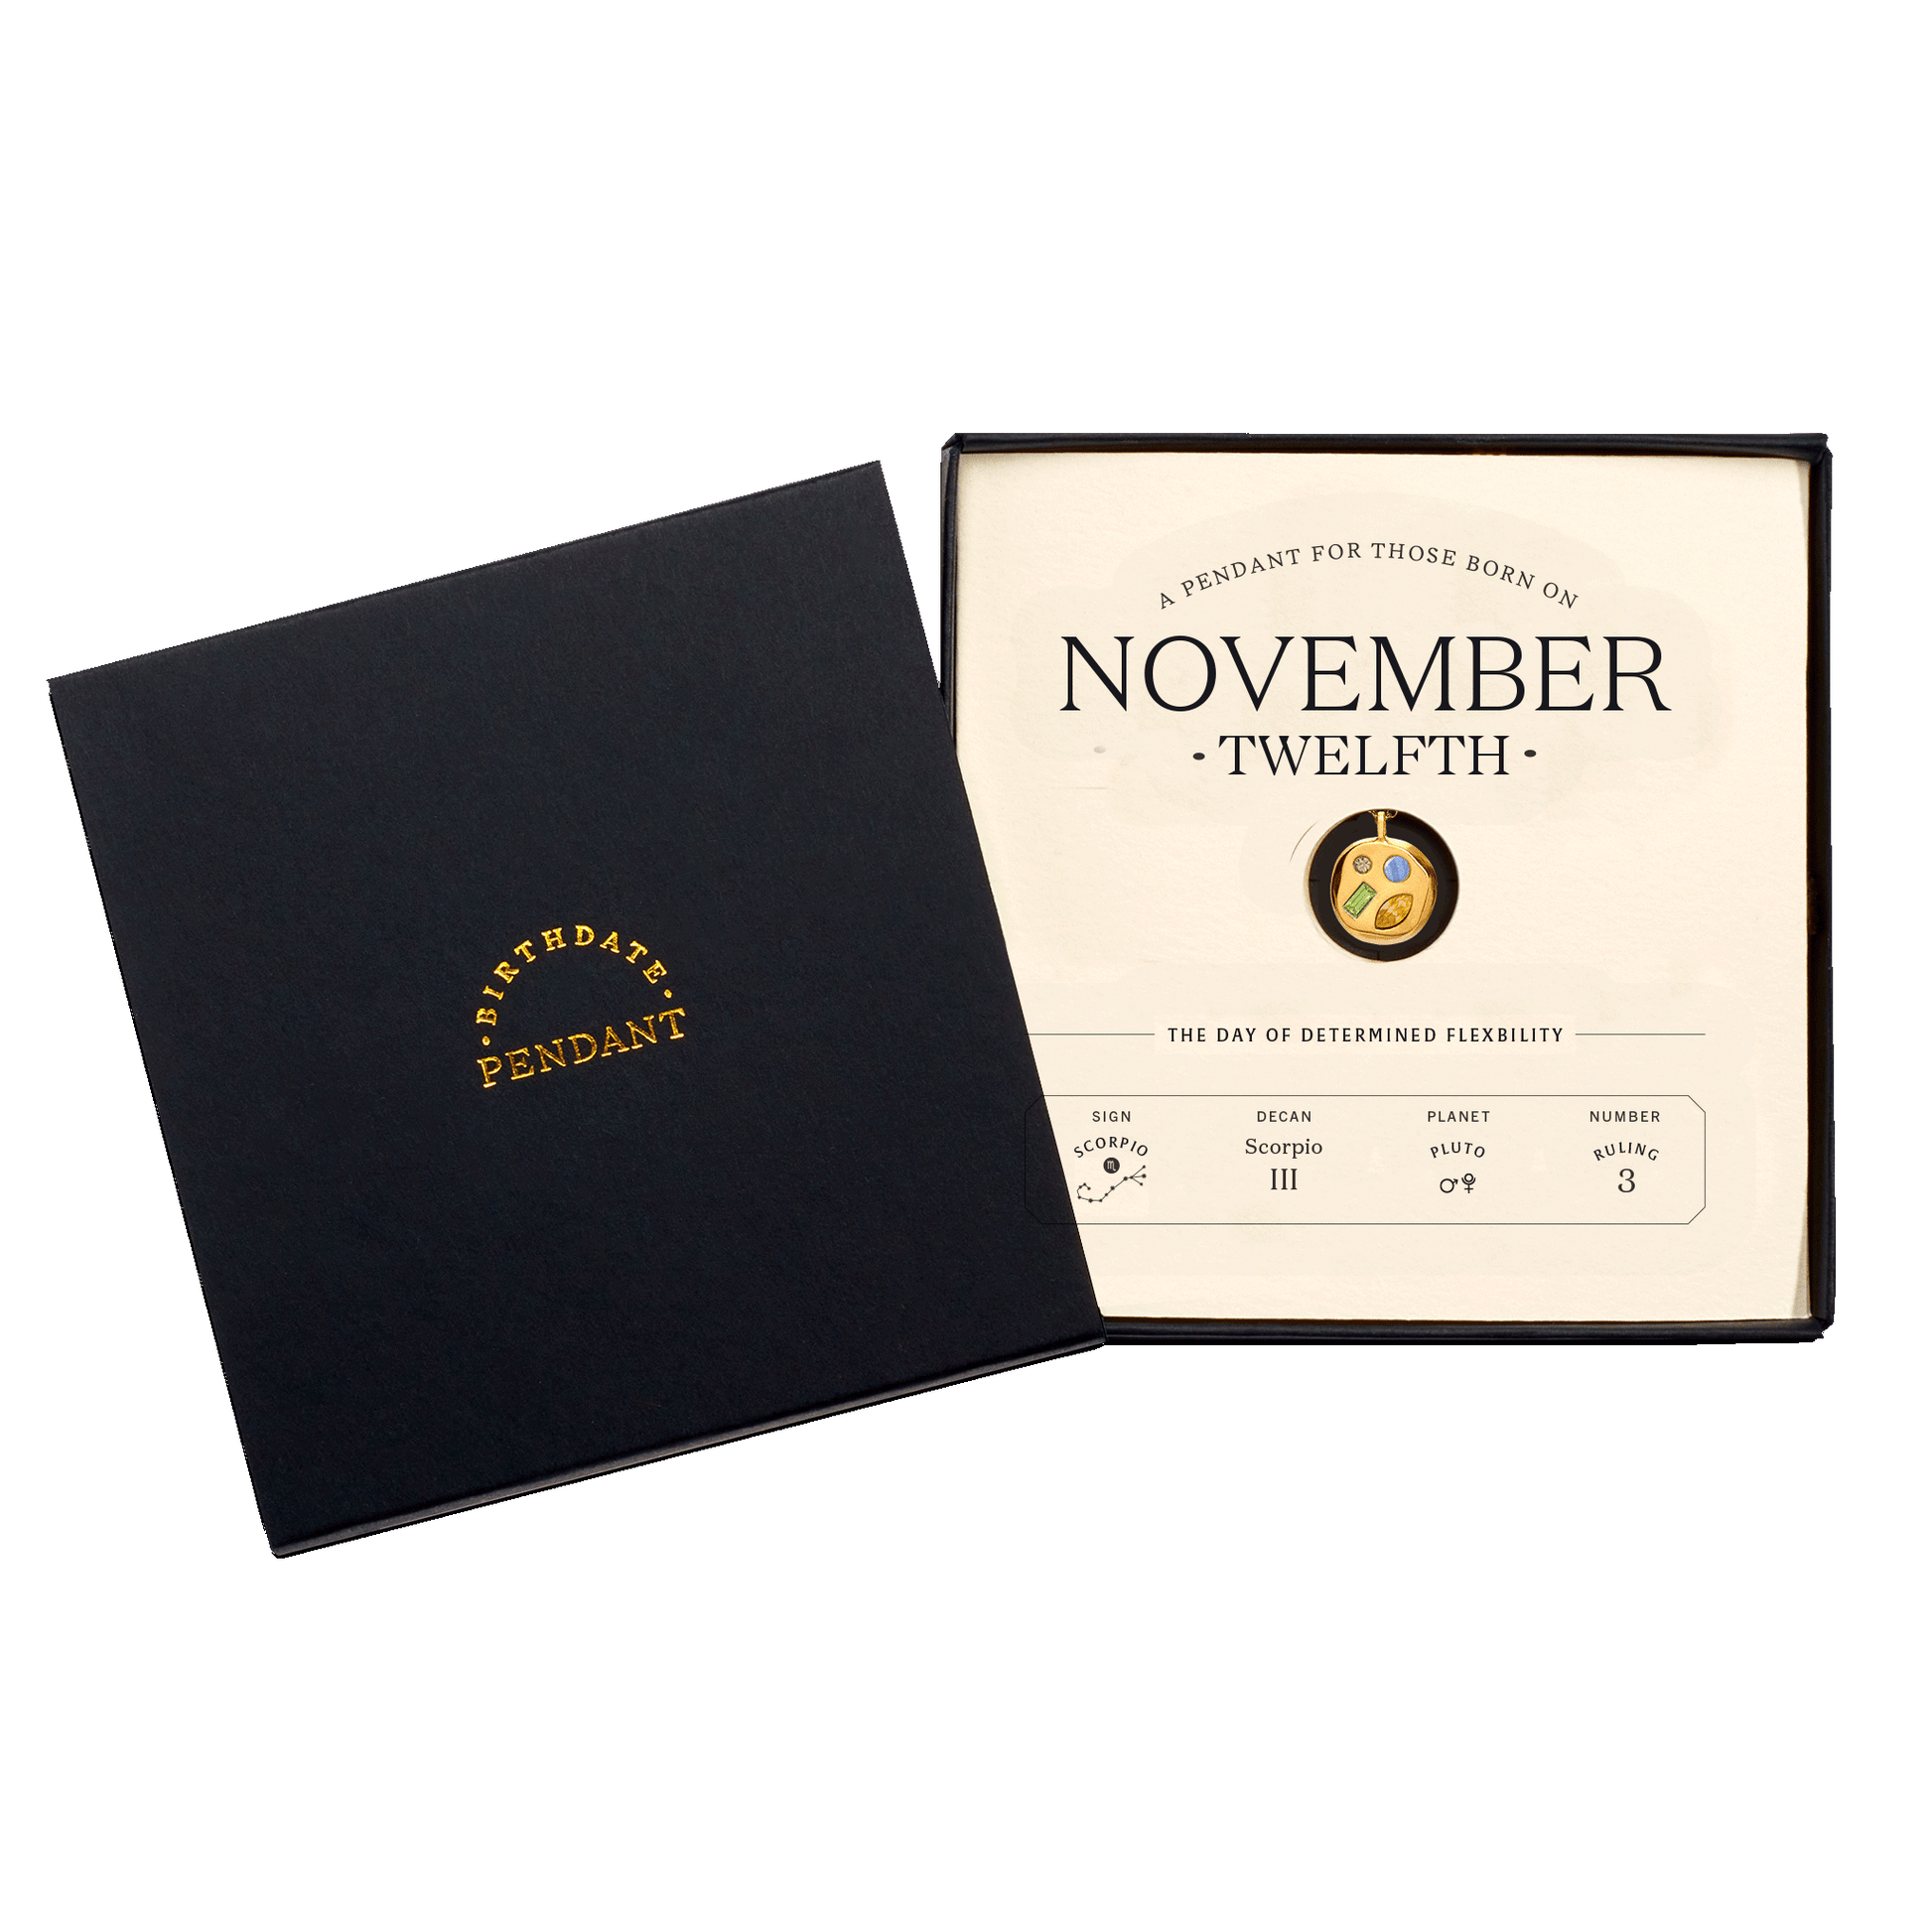 The November Twelfth Pendant inside its box